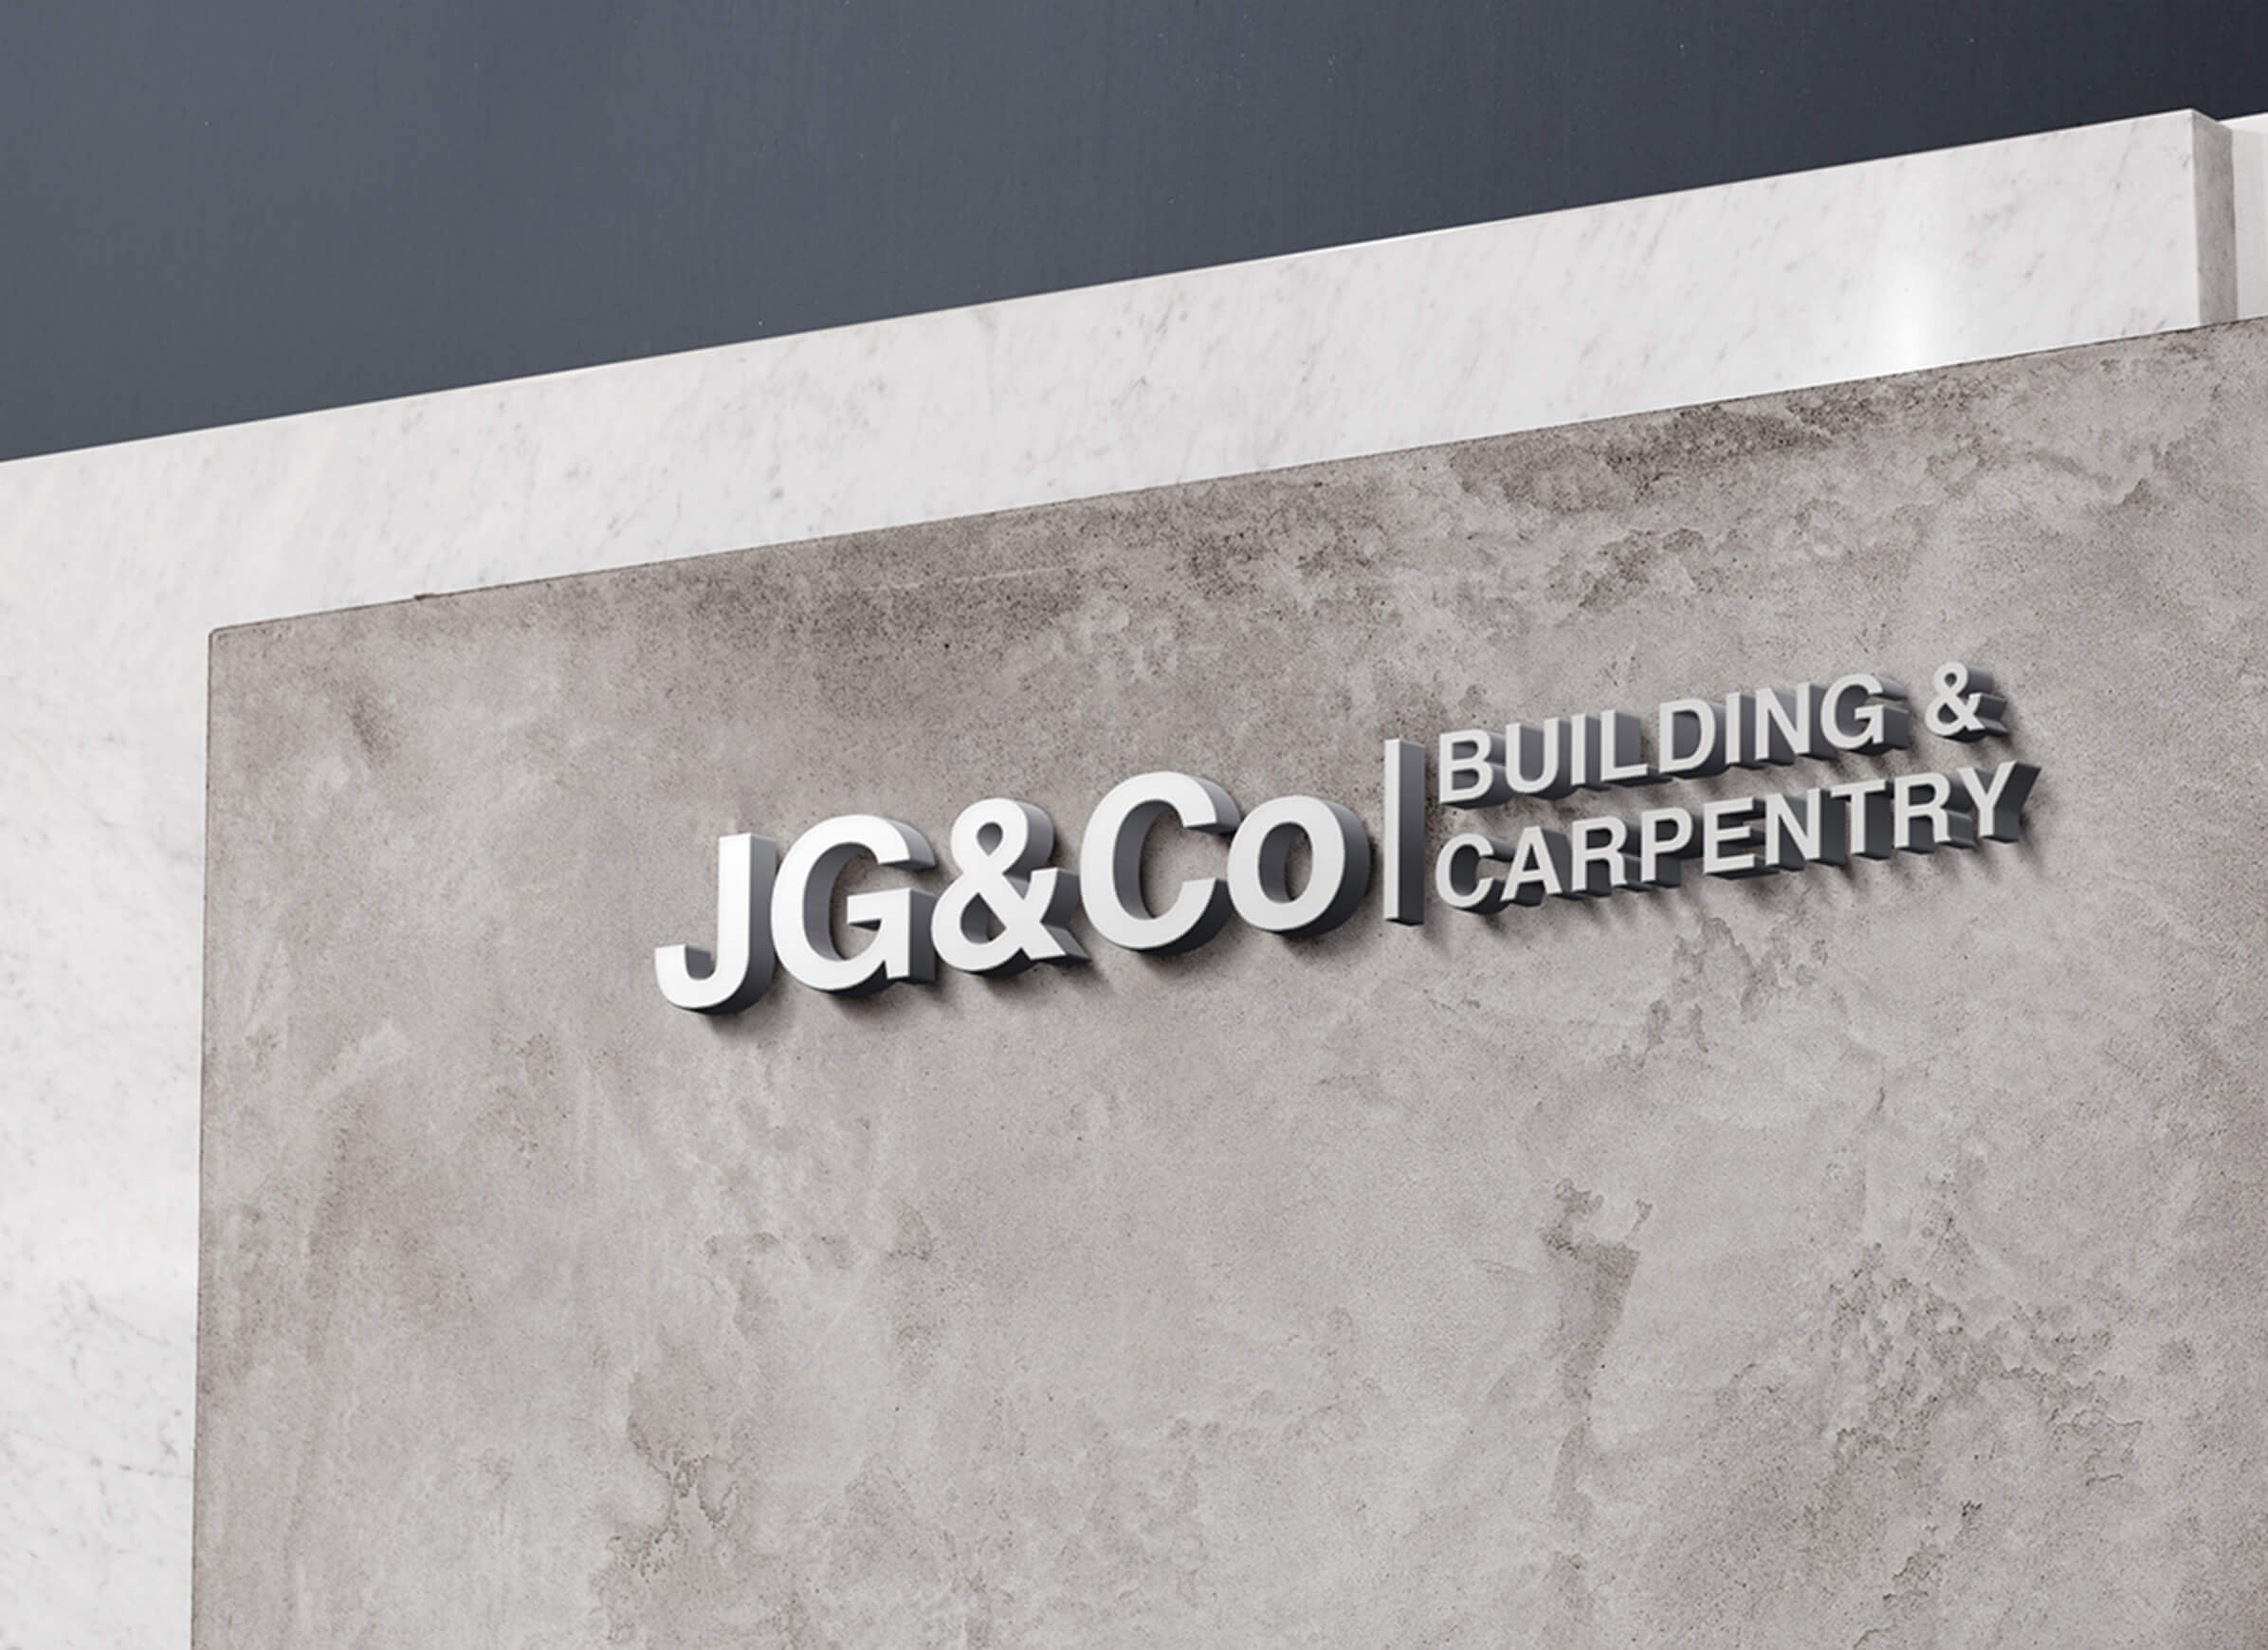 JG&Co-wall-signage-metrodesign-branding-logo-and-graphic-design-service-for-builder-building-carpentry-company-apparel-designer-sydney-bexley-kogarah